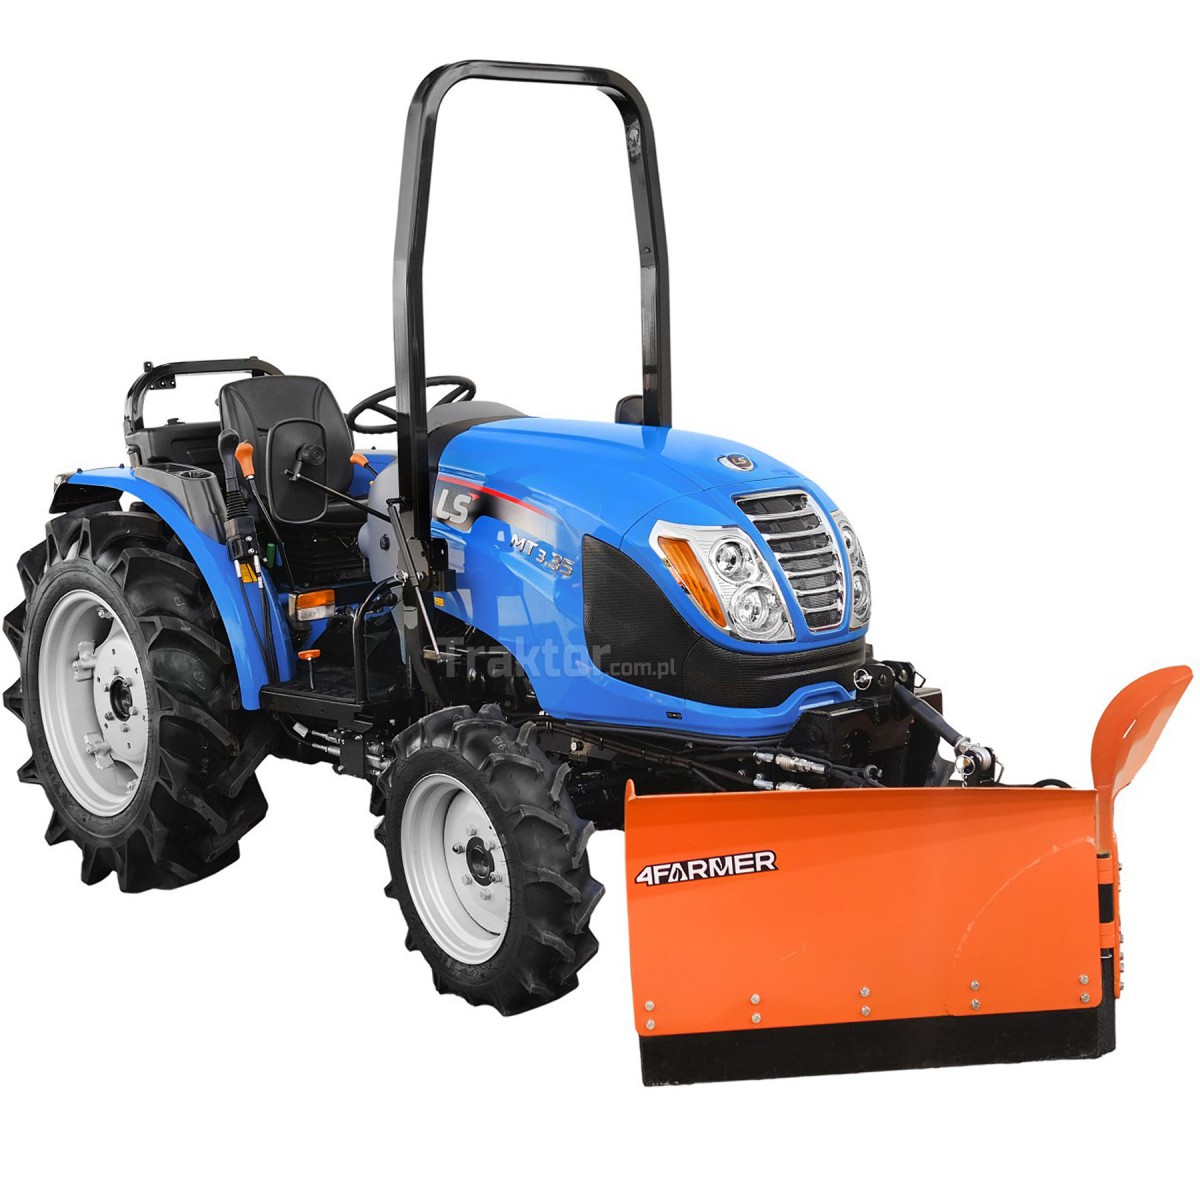 LS Tractor MT3.35 MEC 4x4 - 35 HP + arrow snow plow 200 cm, hydraulic 4FARMER